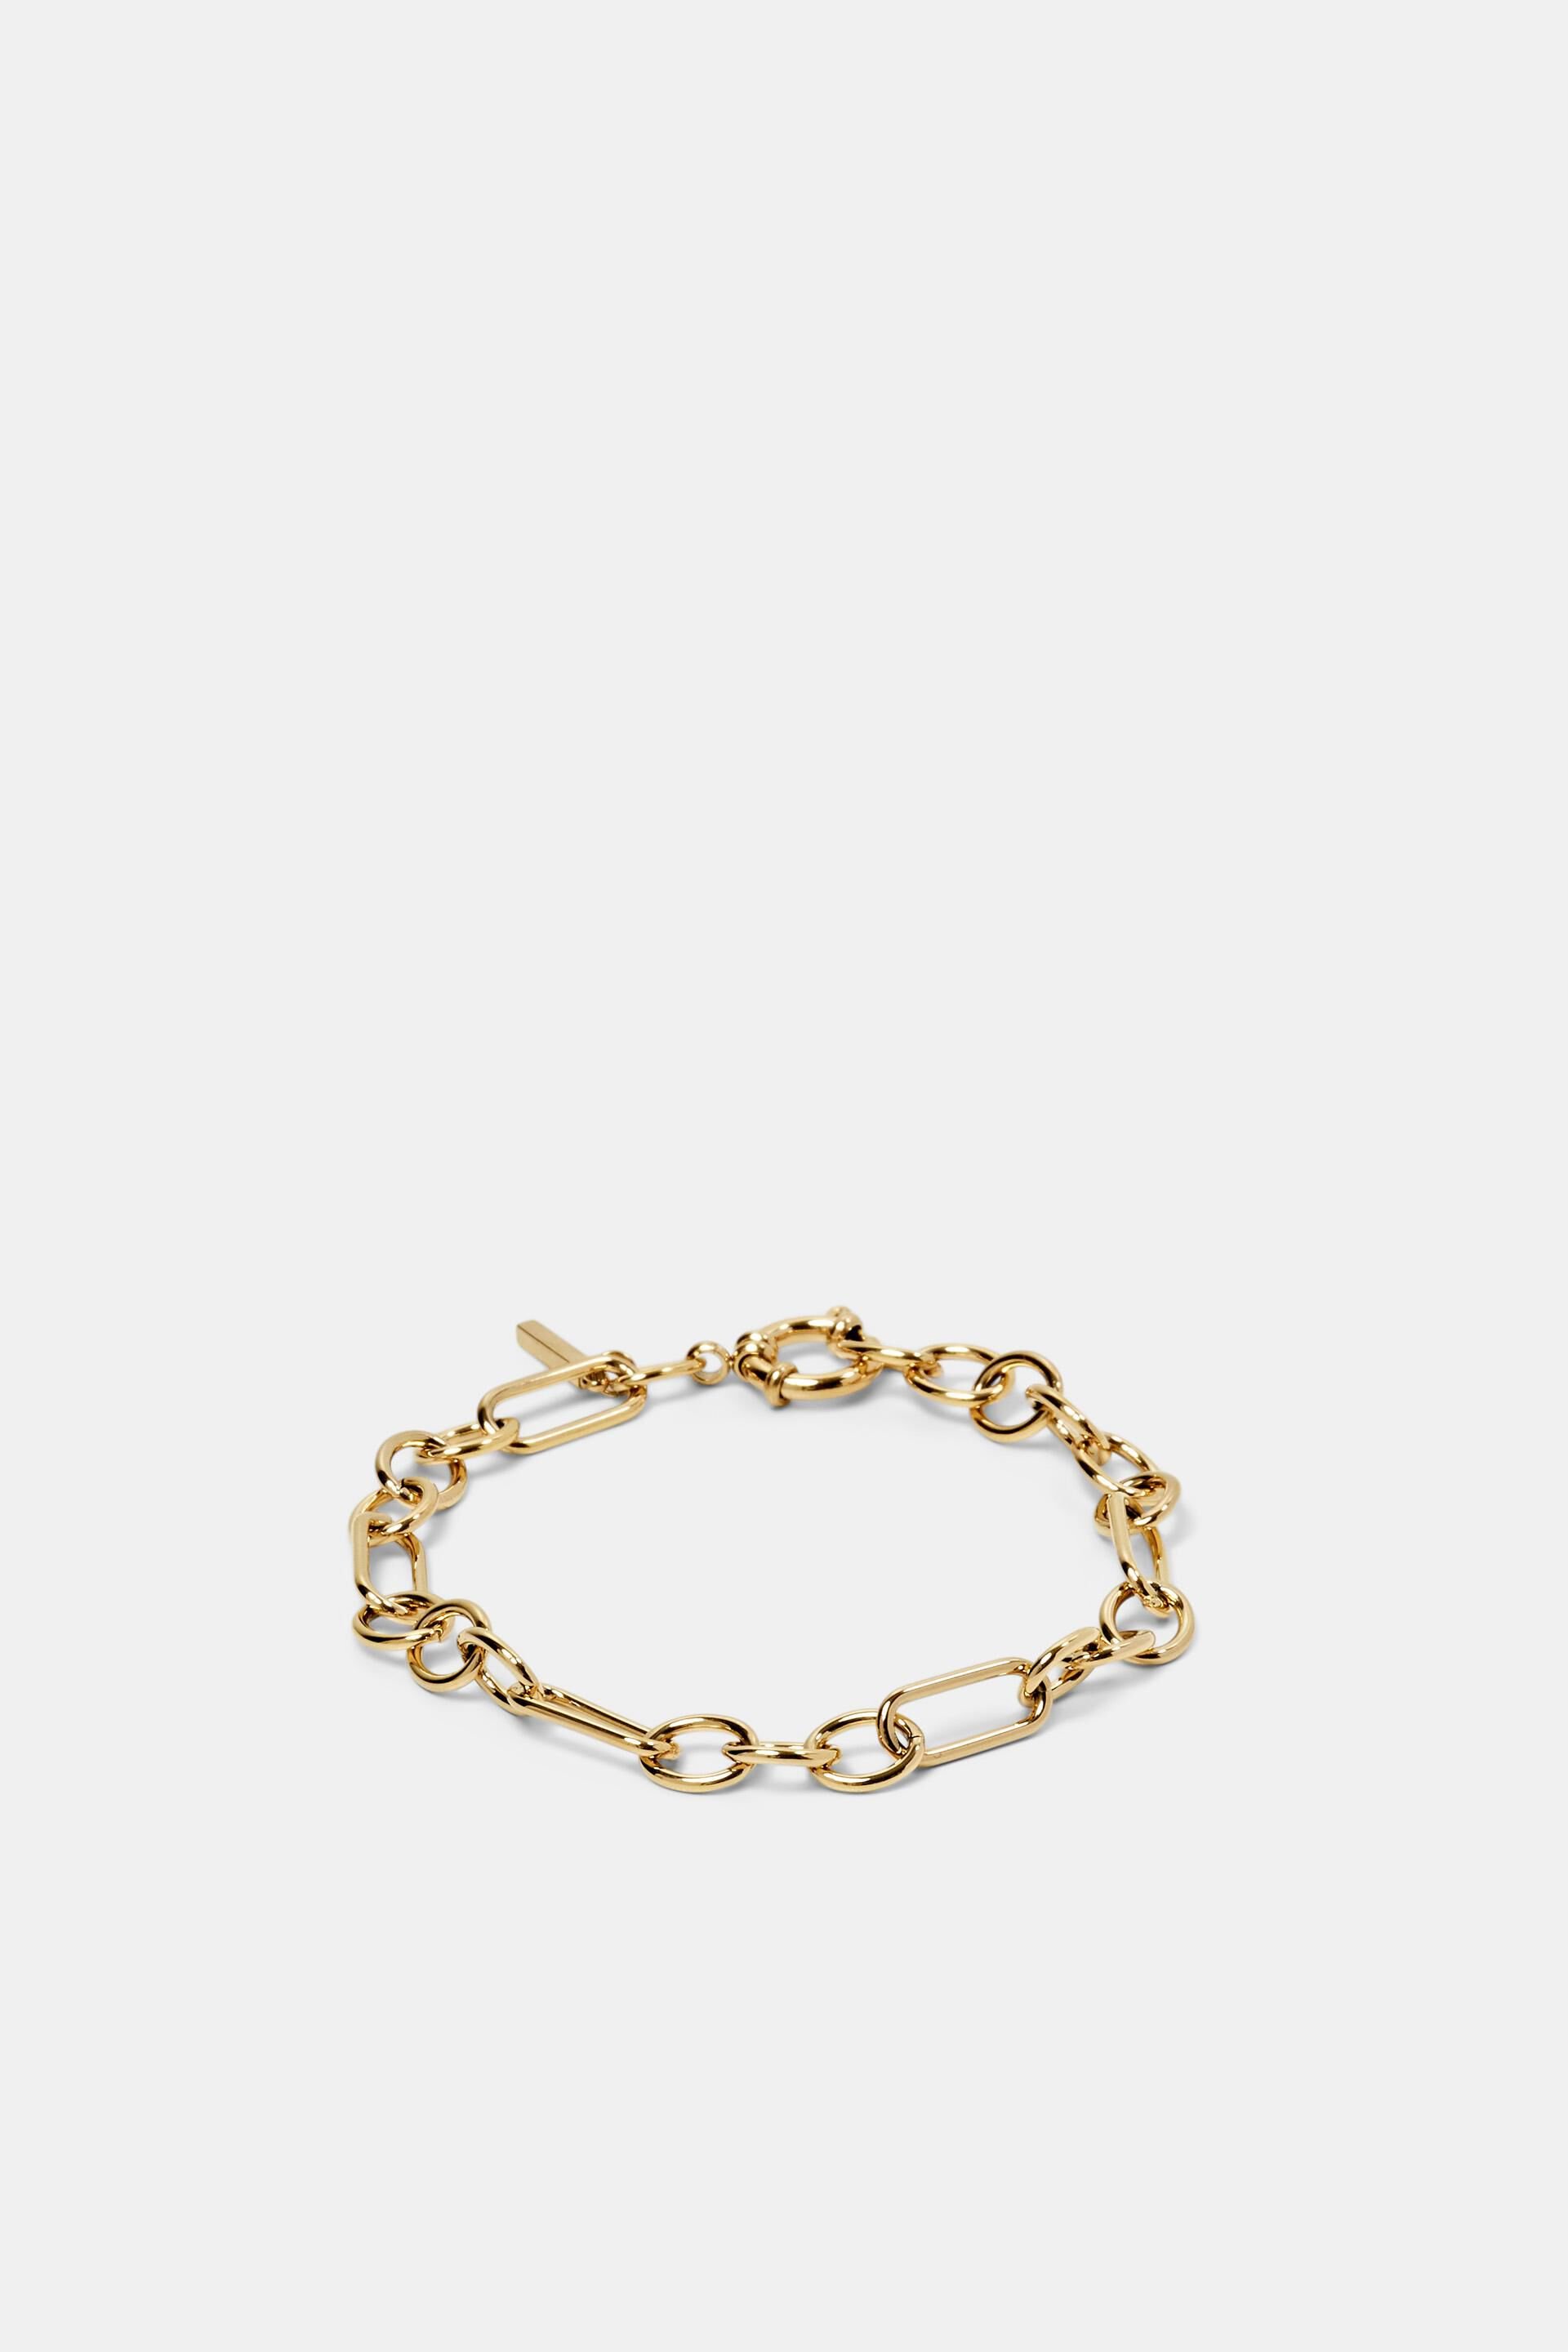 Esprit bracelet, stainless steel Link